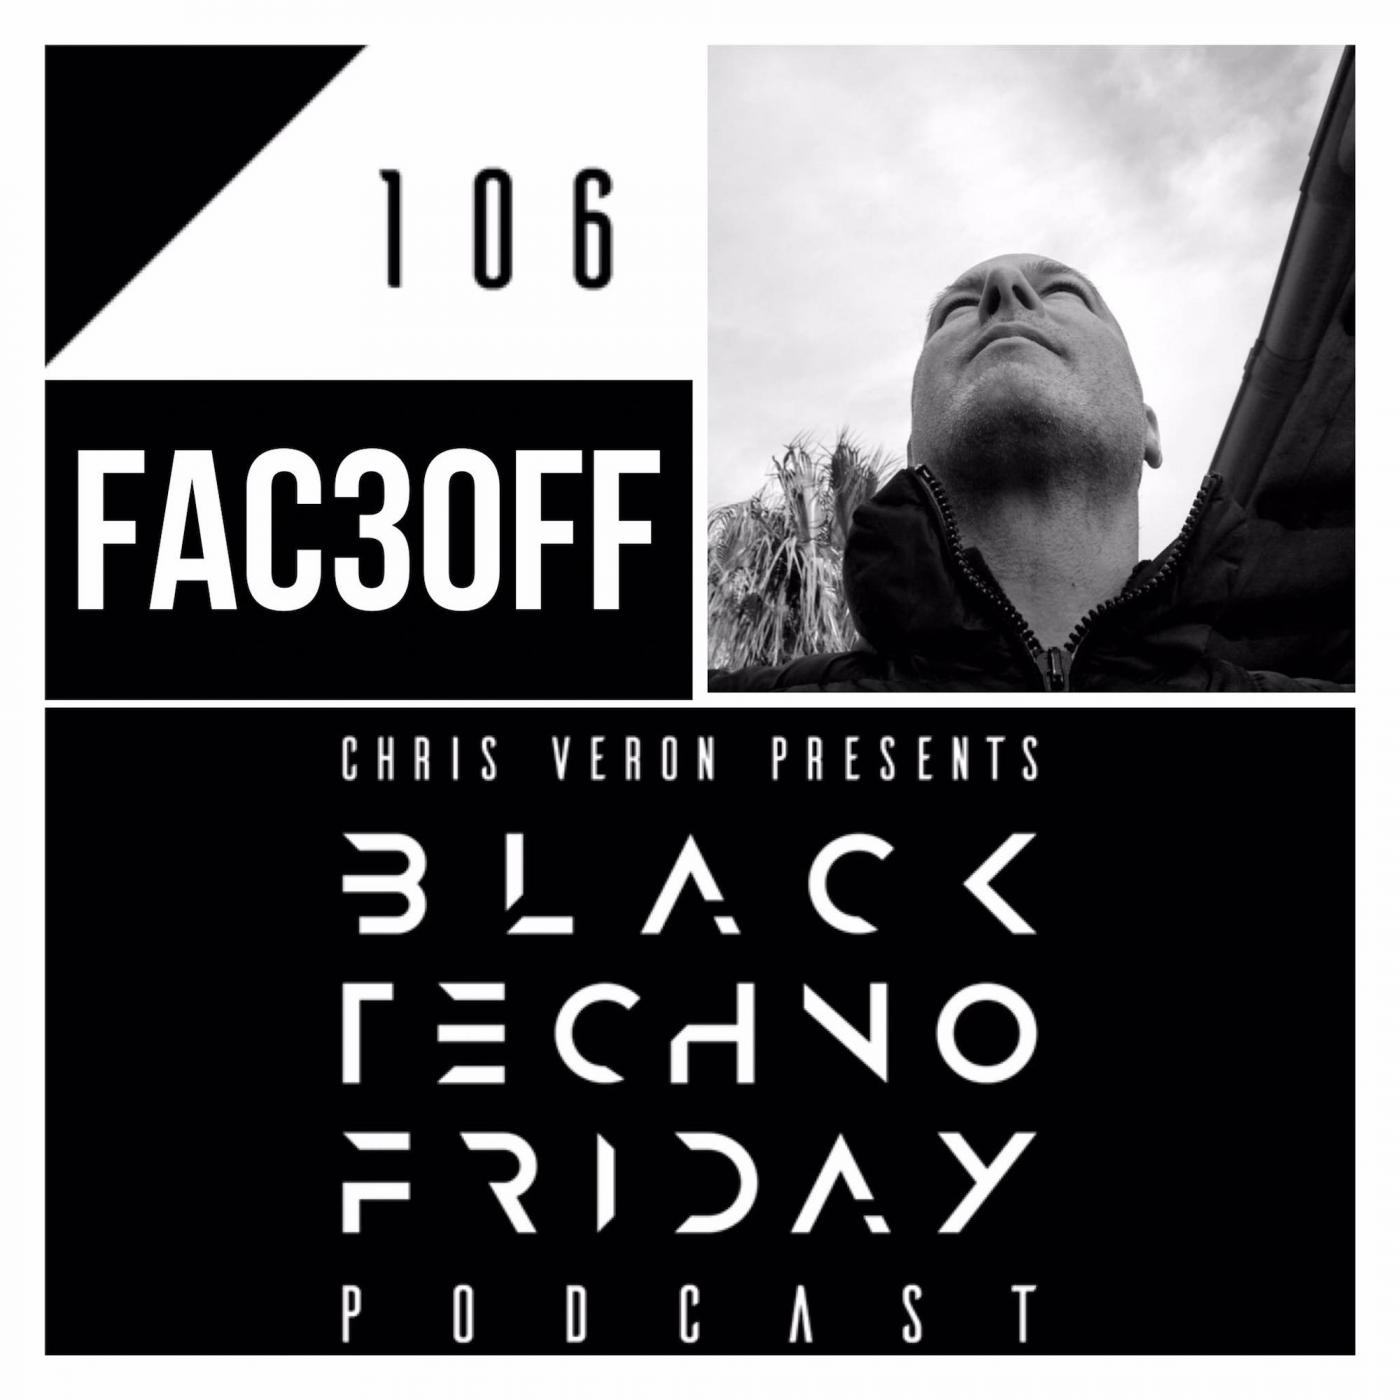 Black TECHNO Friday Podcast #106 | FAC3OFF (Intec/Trapez/Break New Soil)